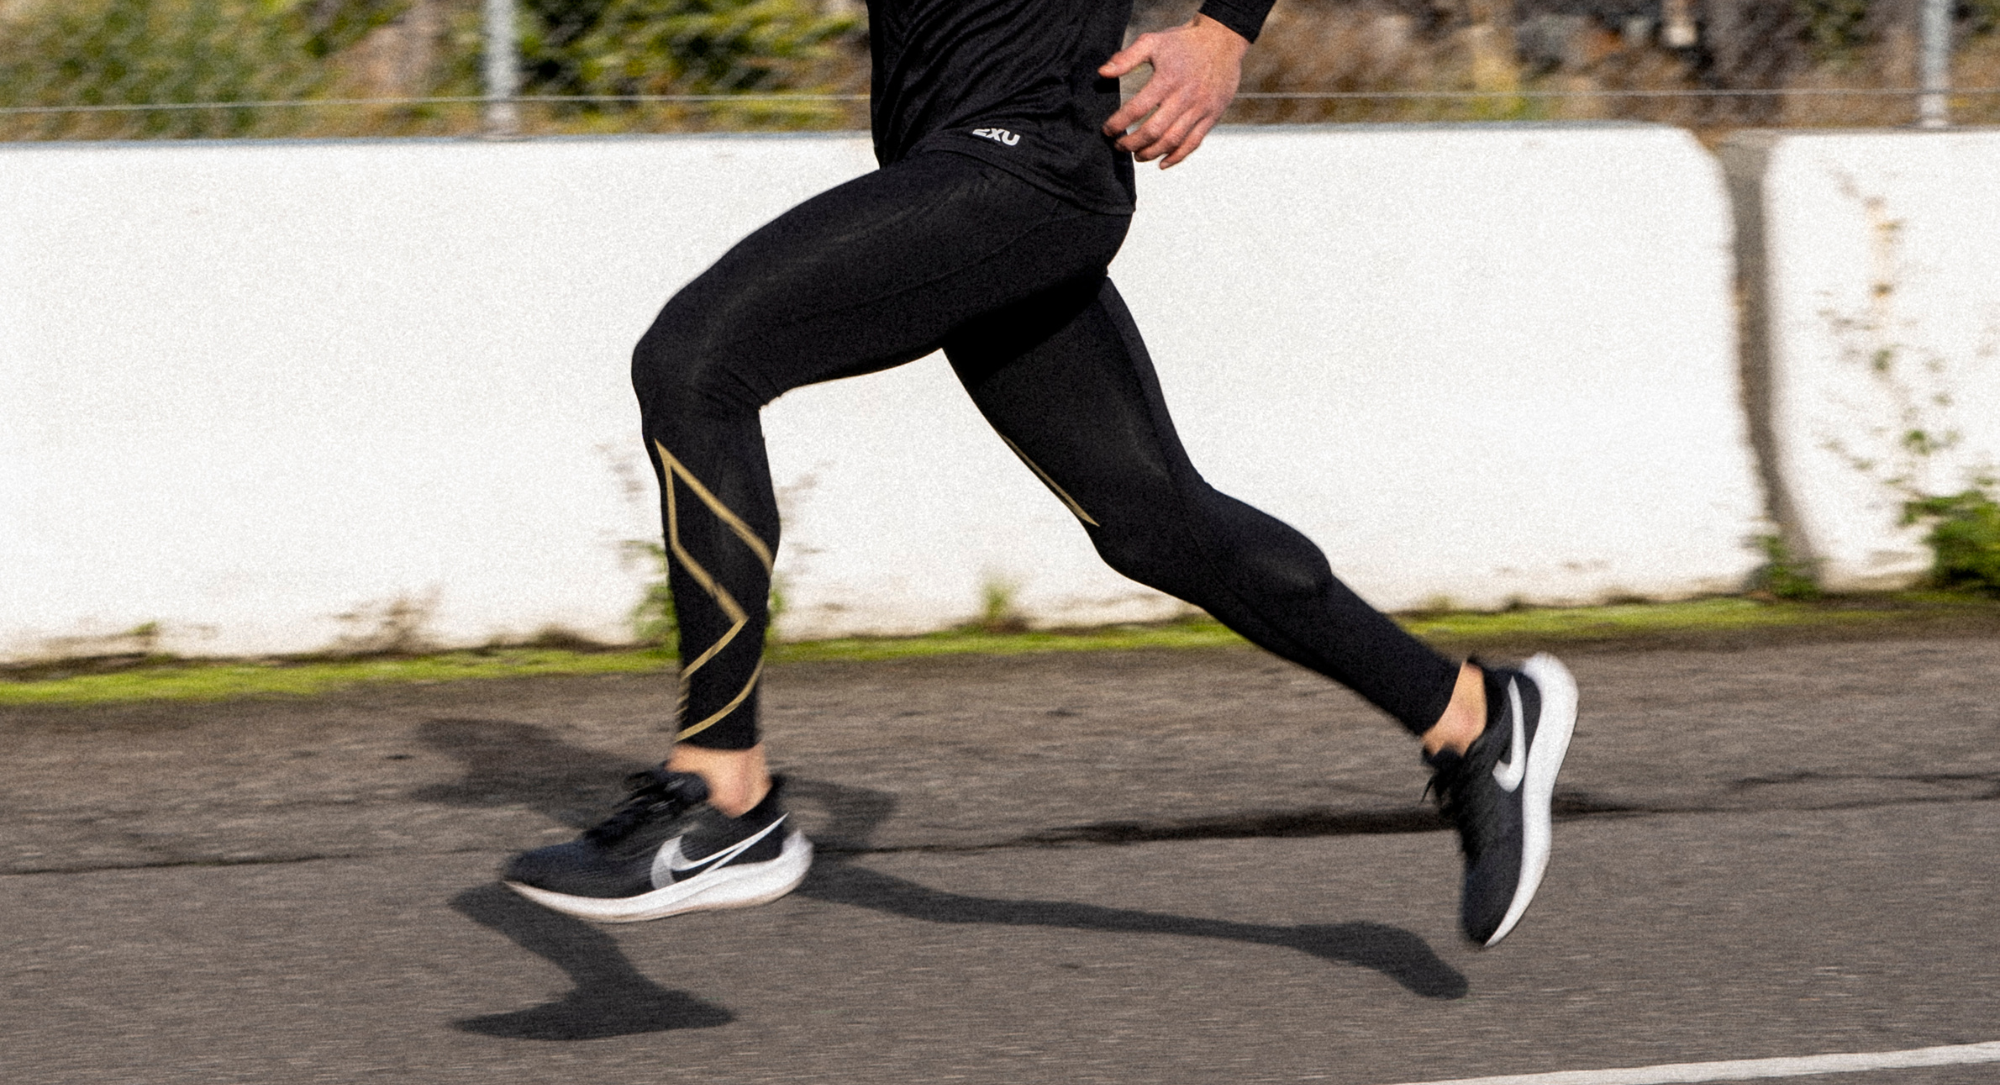 2XU running compression tights for men – Soccer Sport Fitness